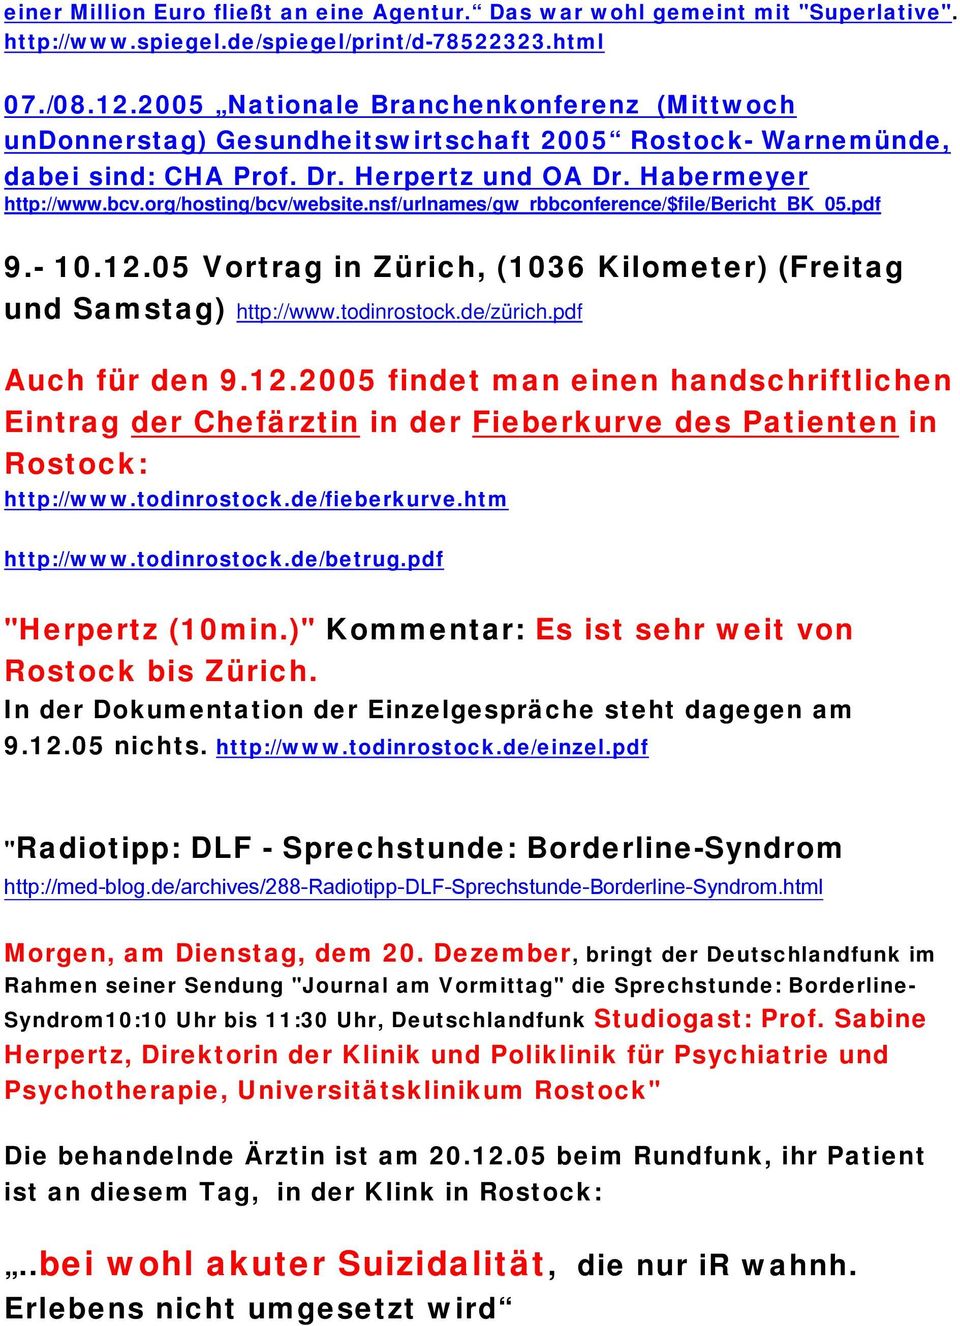 org/hosting/bcv/website.nsf/urlnames/gw_rbbconference/$file/bericht_bk_05.pdf 9.- 10.12.05 Vortrag in Zürich, (1036 Kilometer) (Freitag und Samstag) http://www.todinrostock.de/zürich.